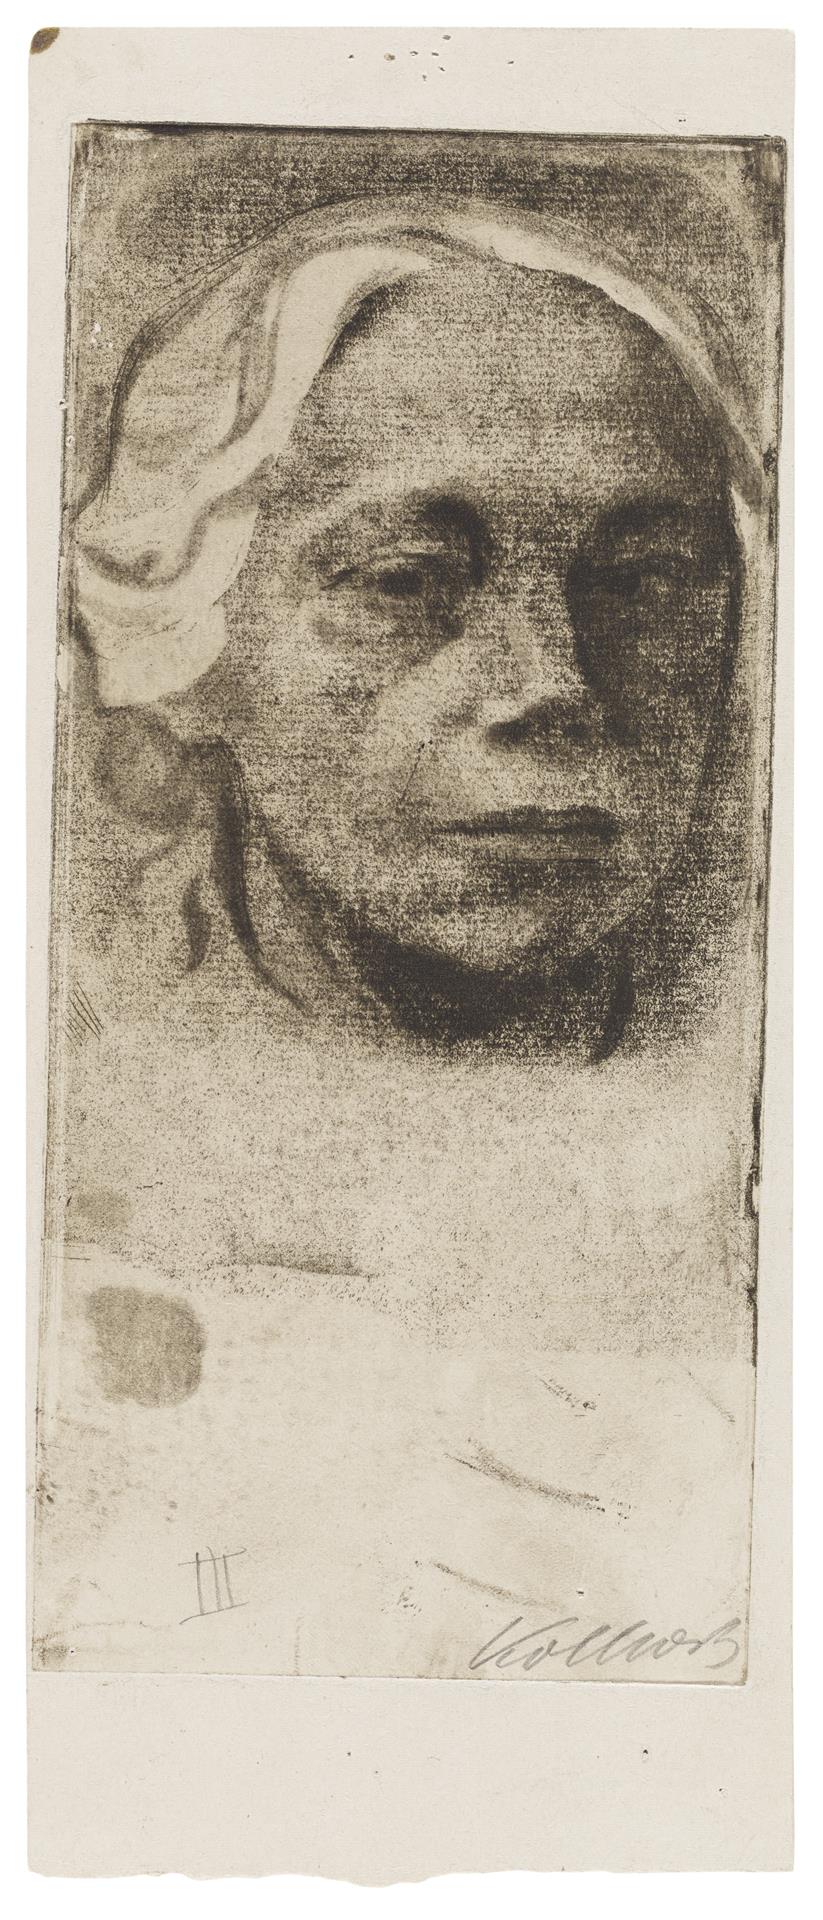 Käthe Kollwitz, Self-portrait, 1912, line etching, drypoint and vernis mou with imprint of ribbed laid paper, Kn 126 III, Cologne Kollwitz Collection © Käthe Kollwitz Museum Köln